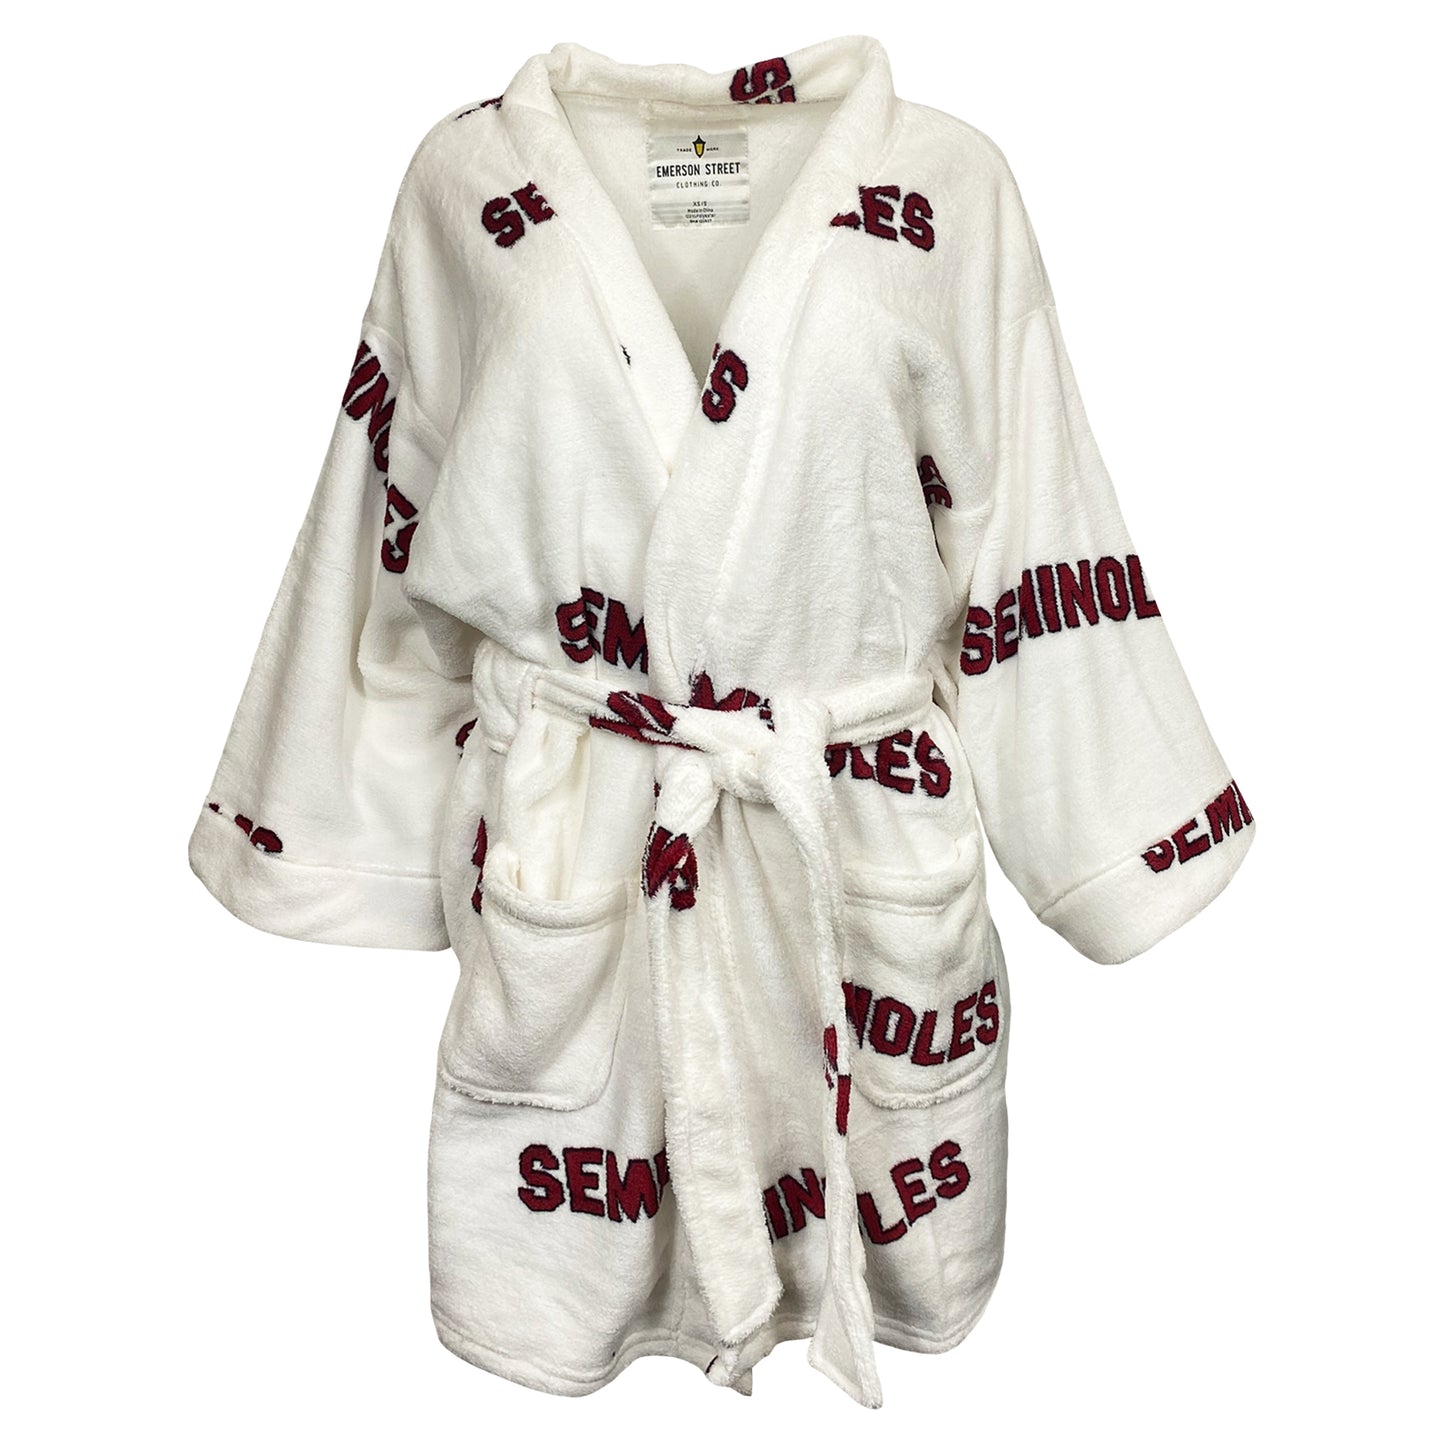 Florida State Seminoles Spa Robe